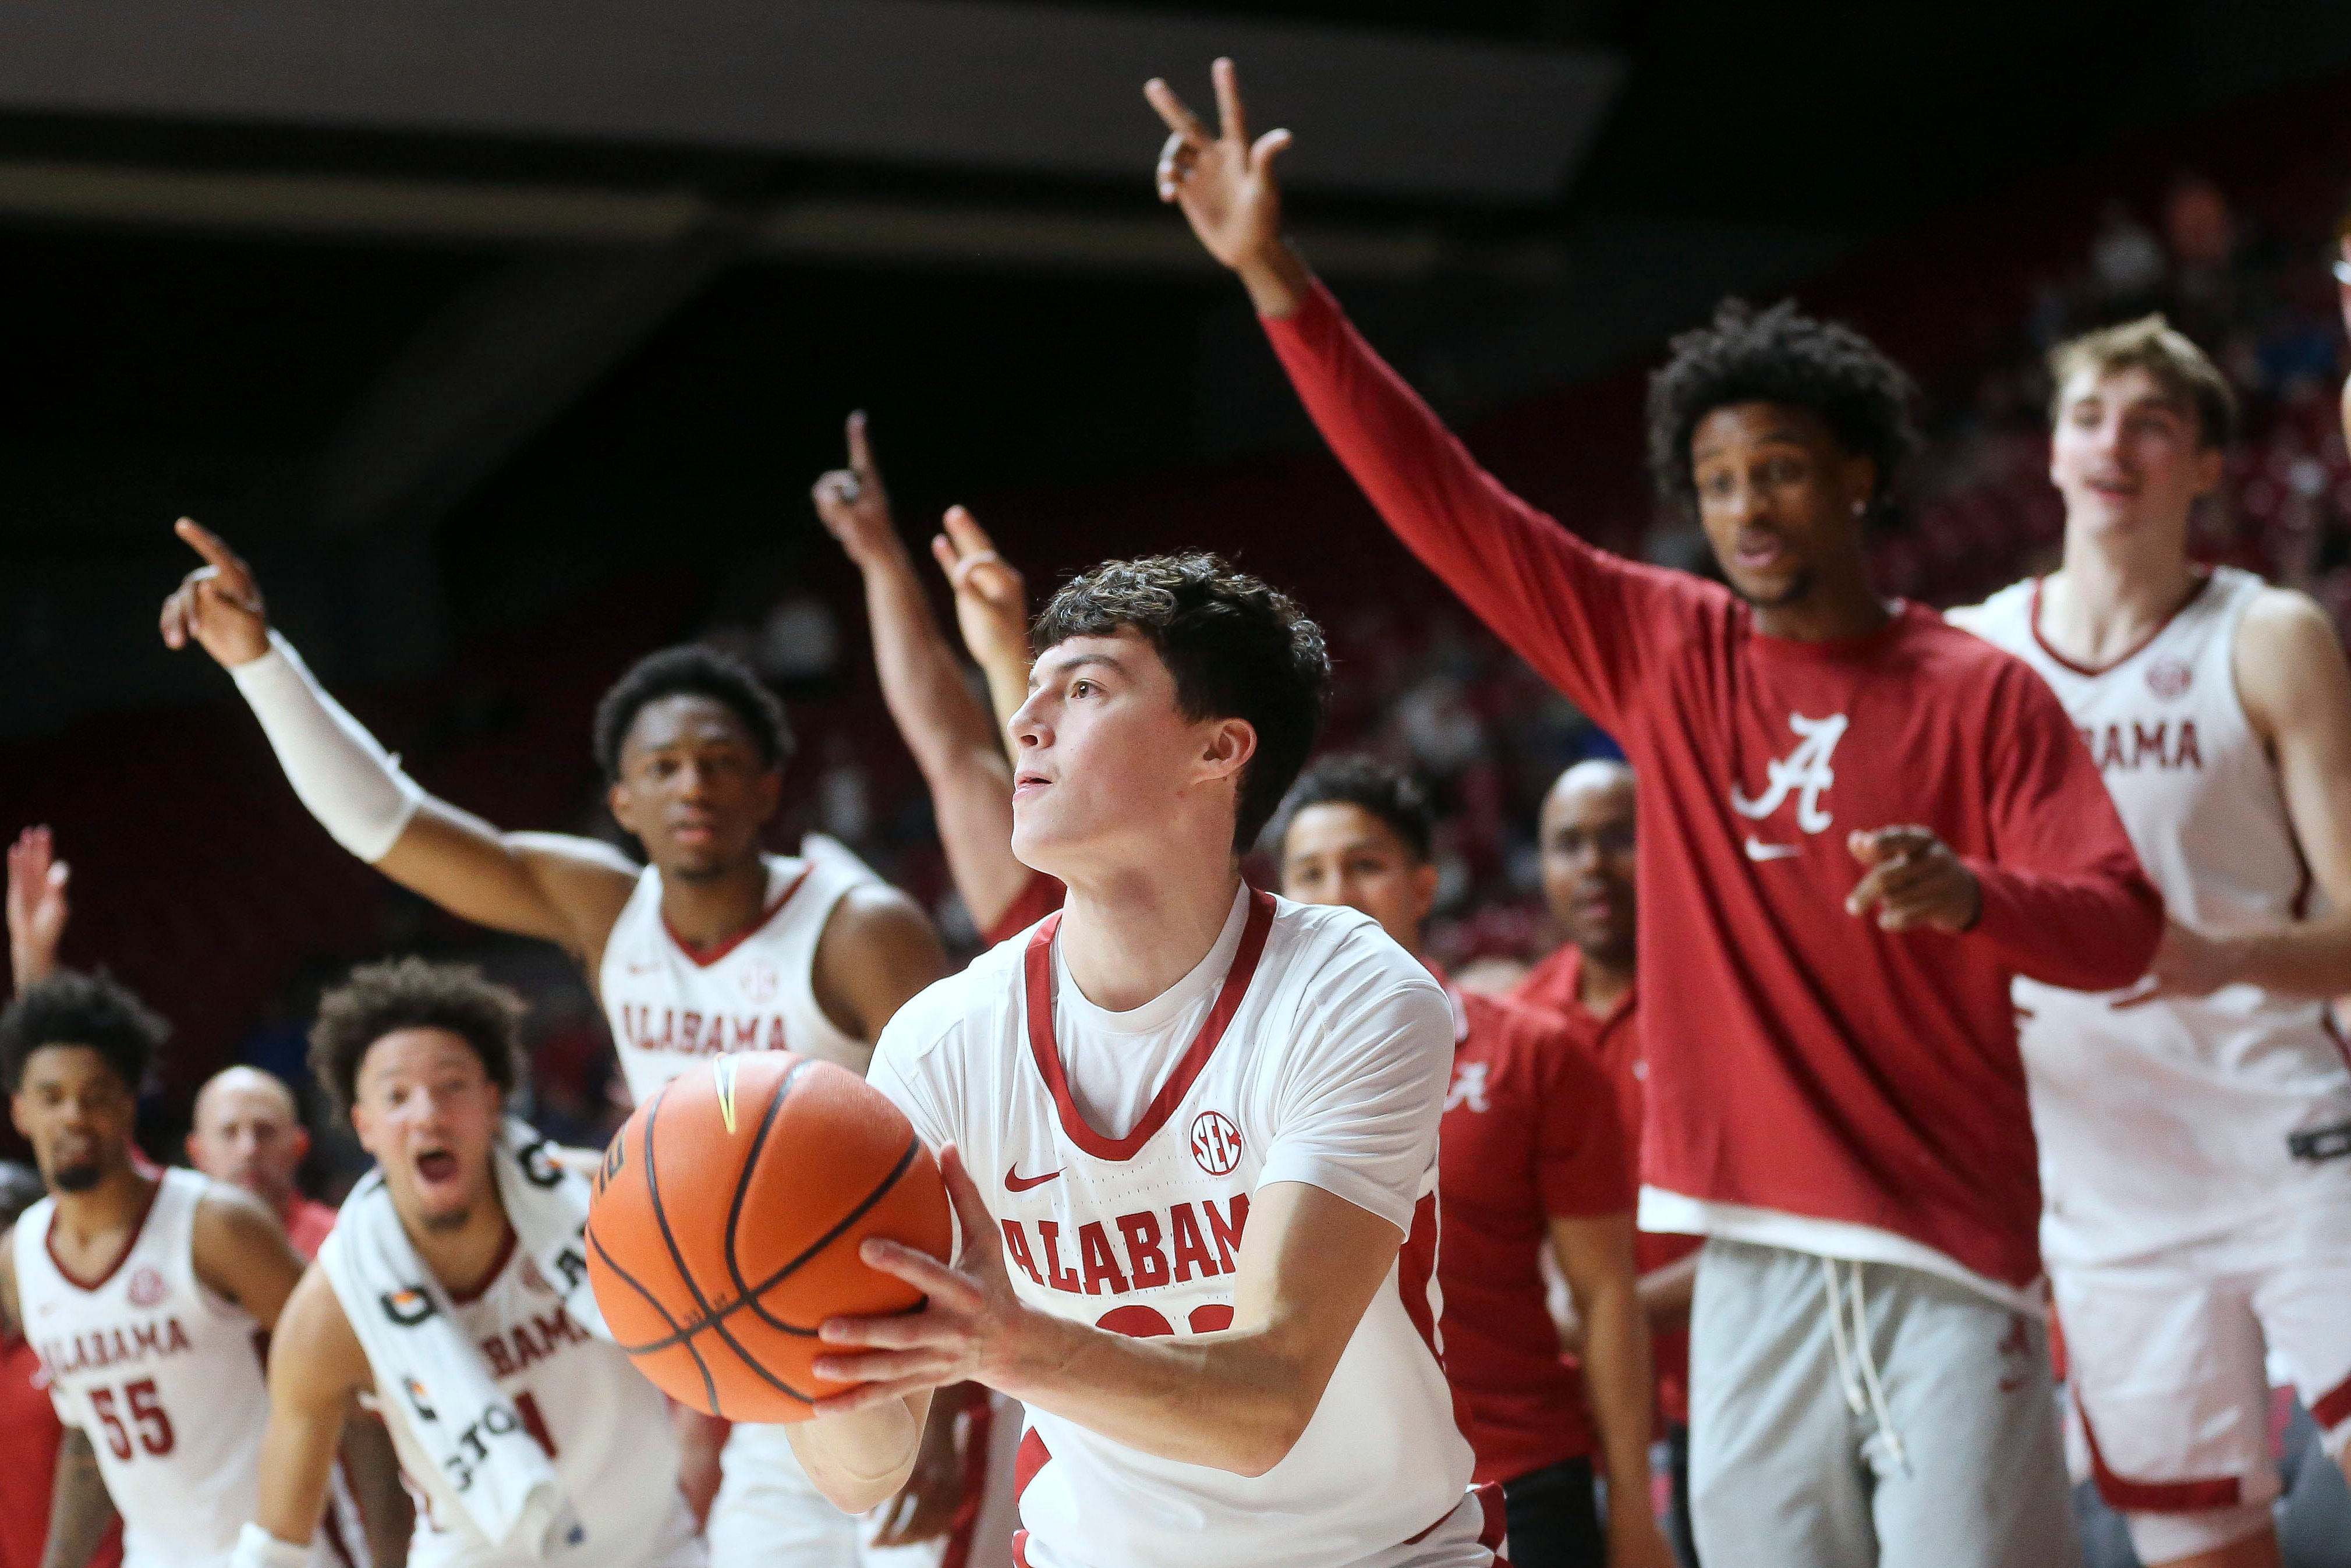 NCAA Basketball: Morehead State at Alabama